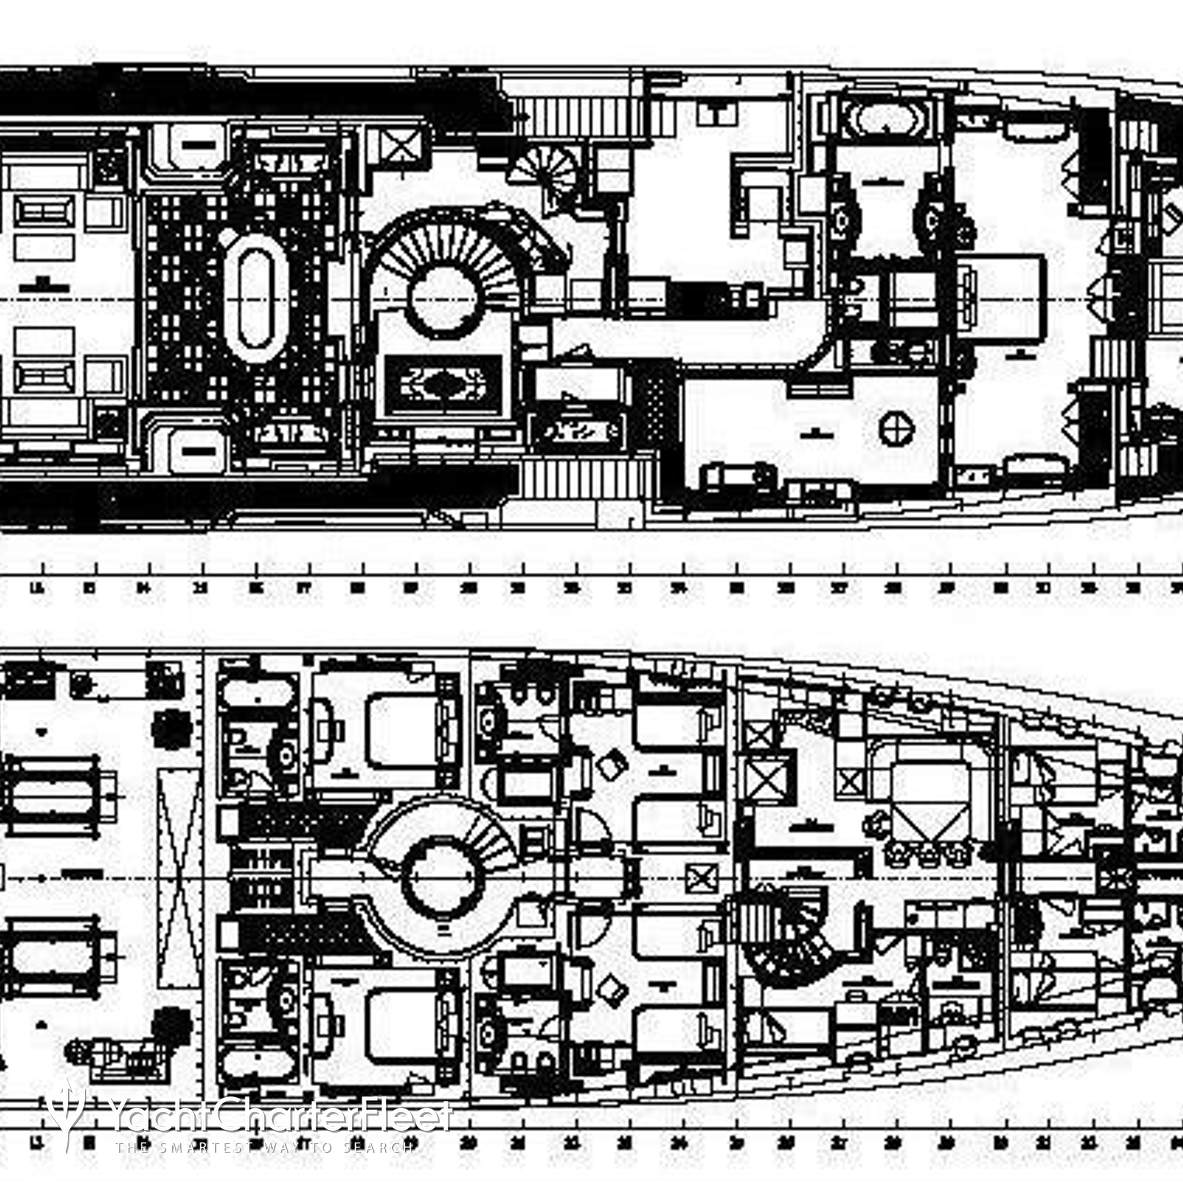 ulysses yacht deck plan